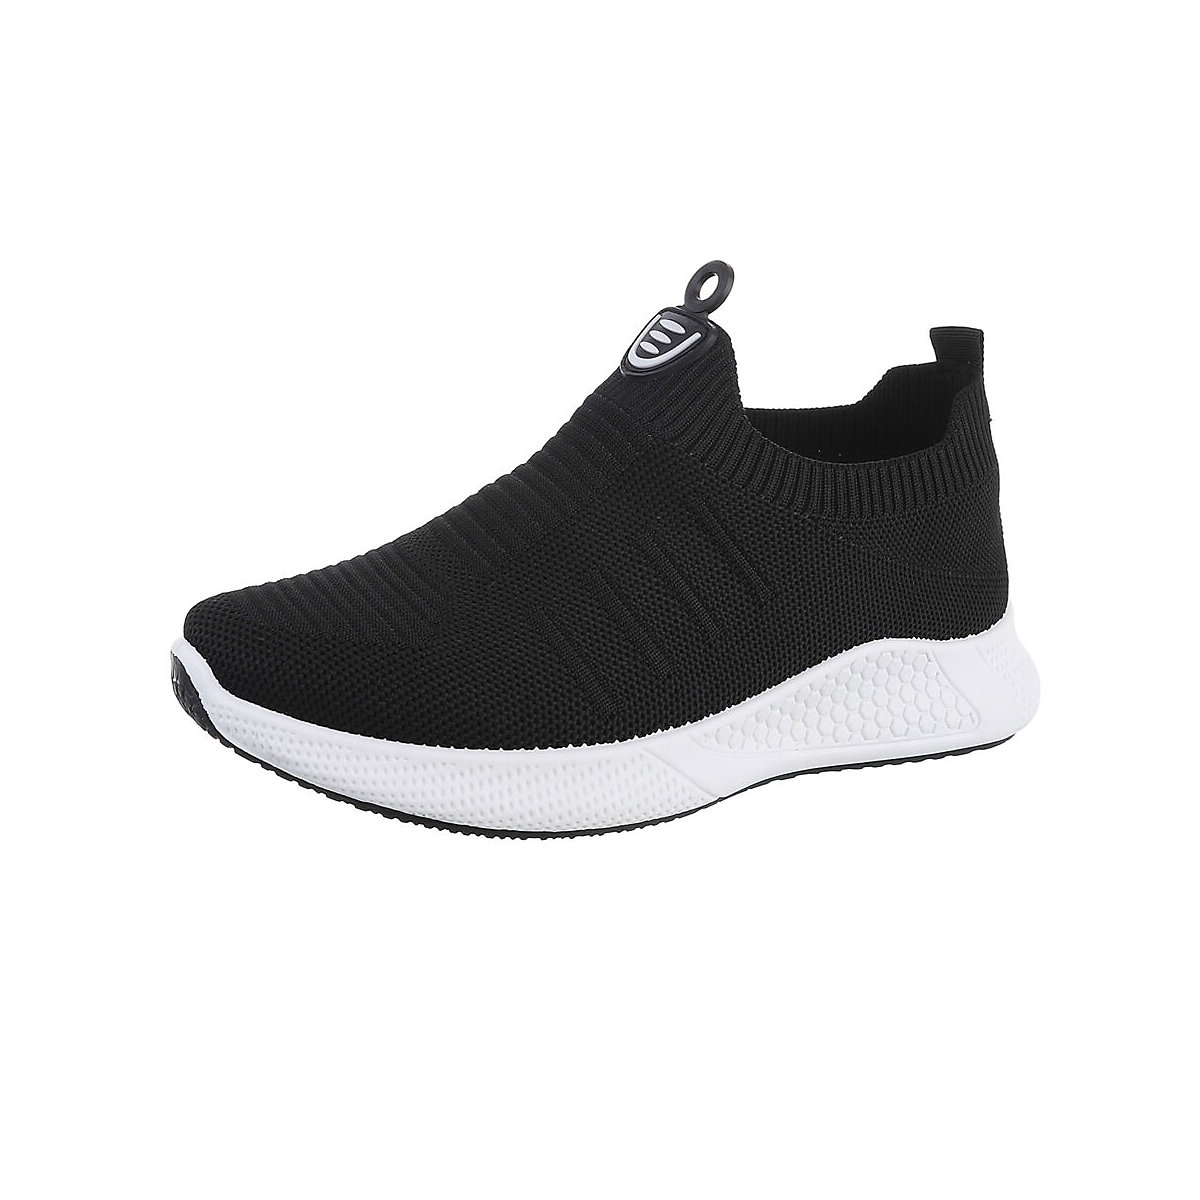 Ital-Design Sneakers Low Flach schwarz/weiß